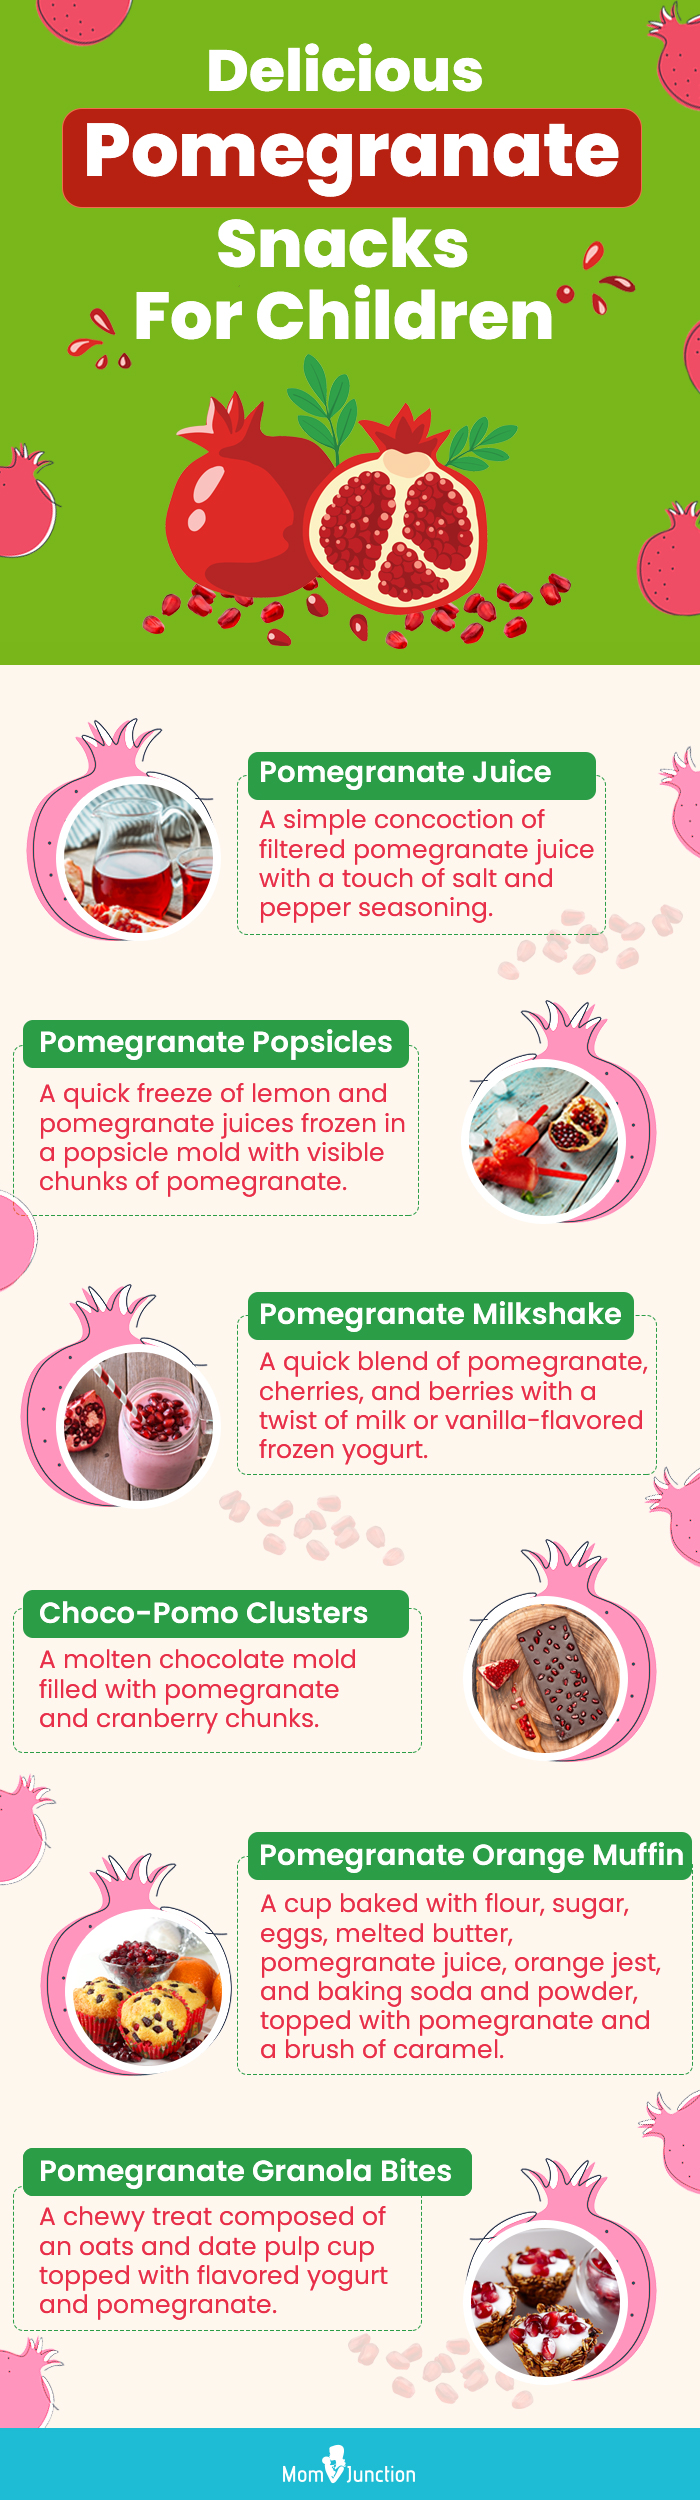 delicious pomegranate snacks for children (infographic)